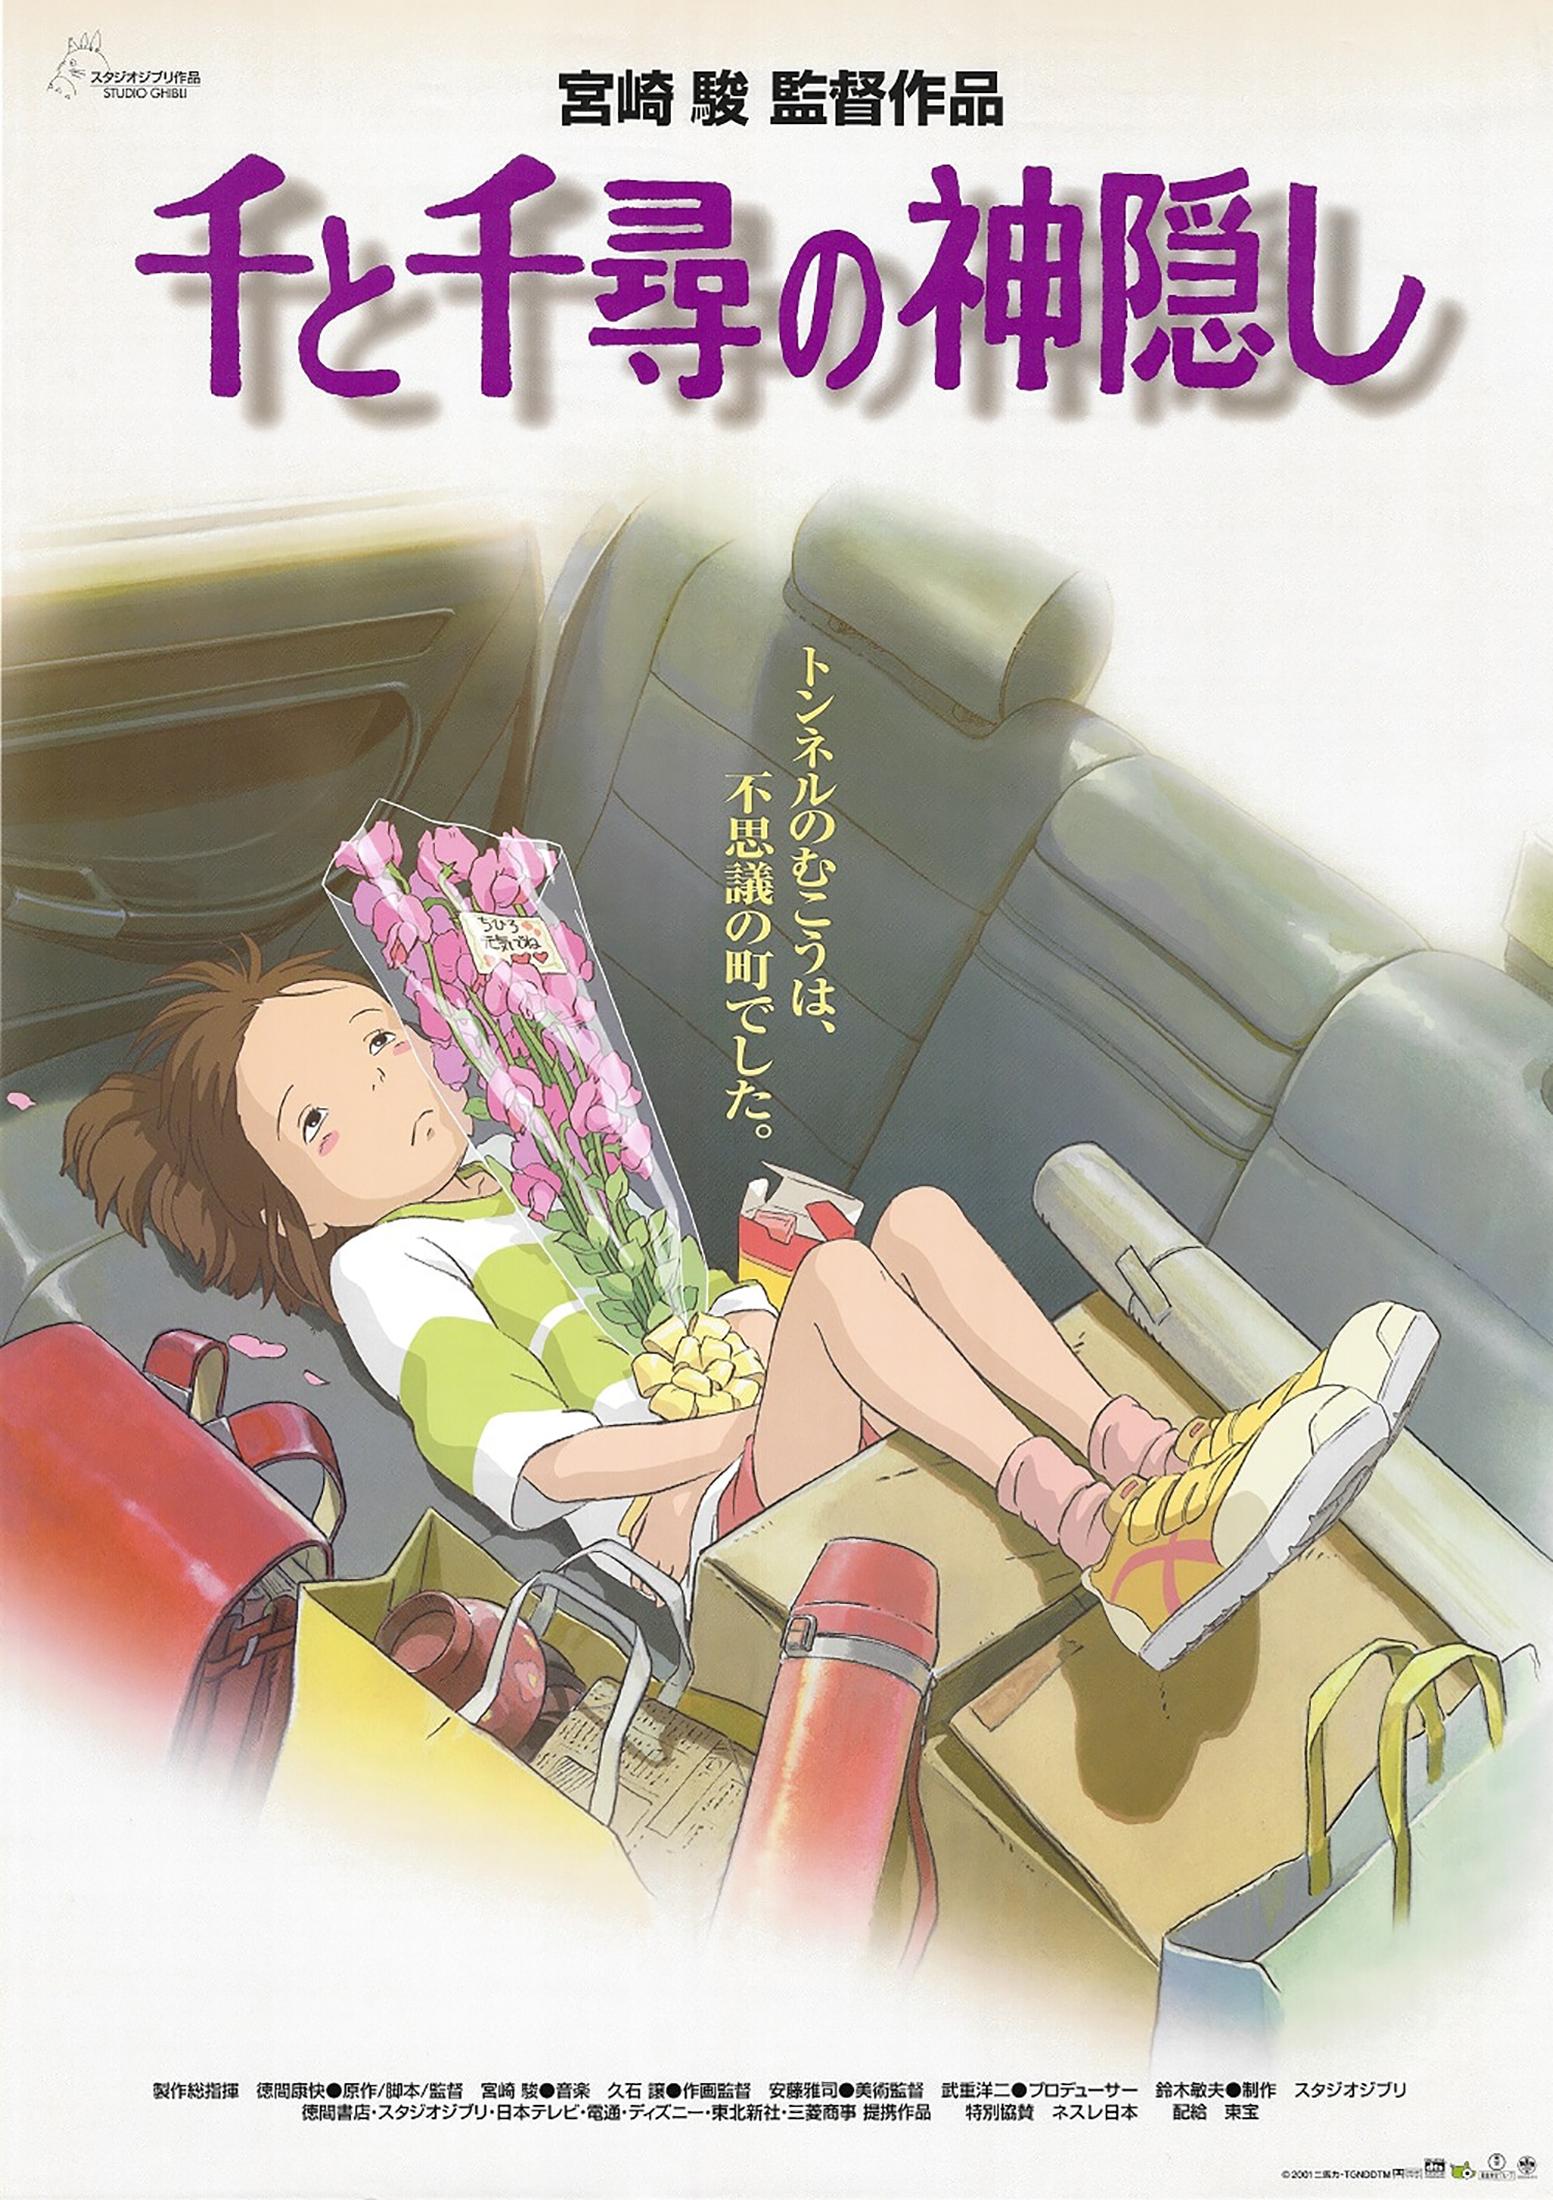 Spirited Away Original Vintage Movie Poster, Studio Ghibli (2001), Miyazaki - Print by Unknown